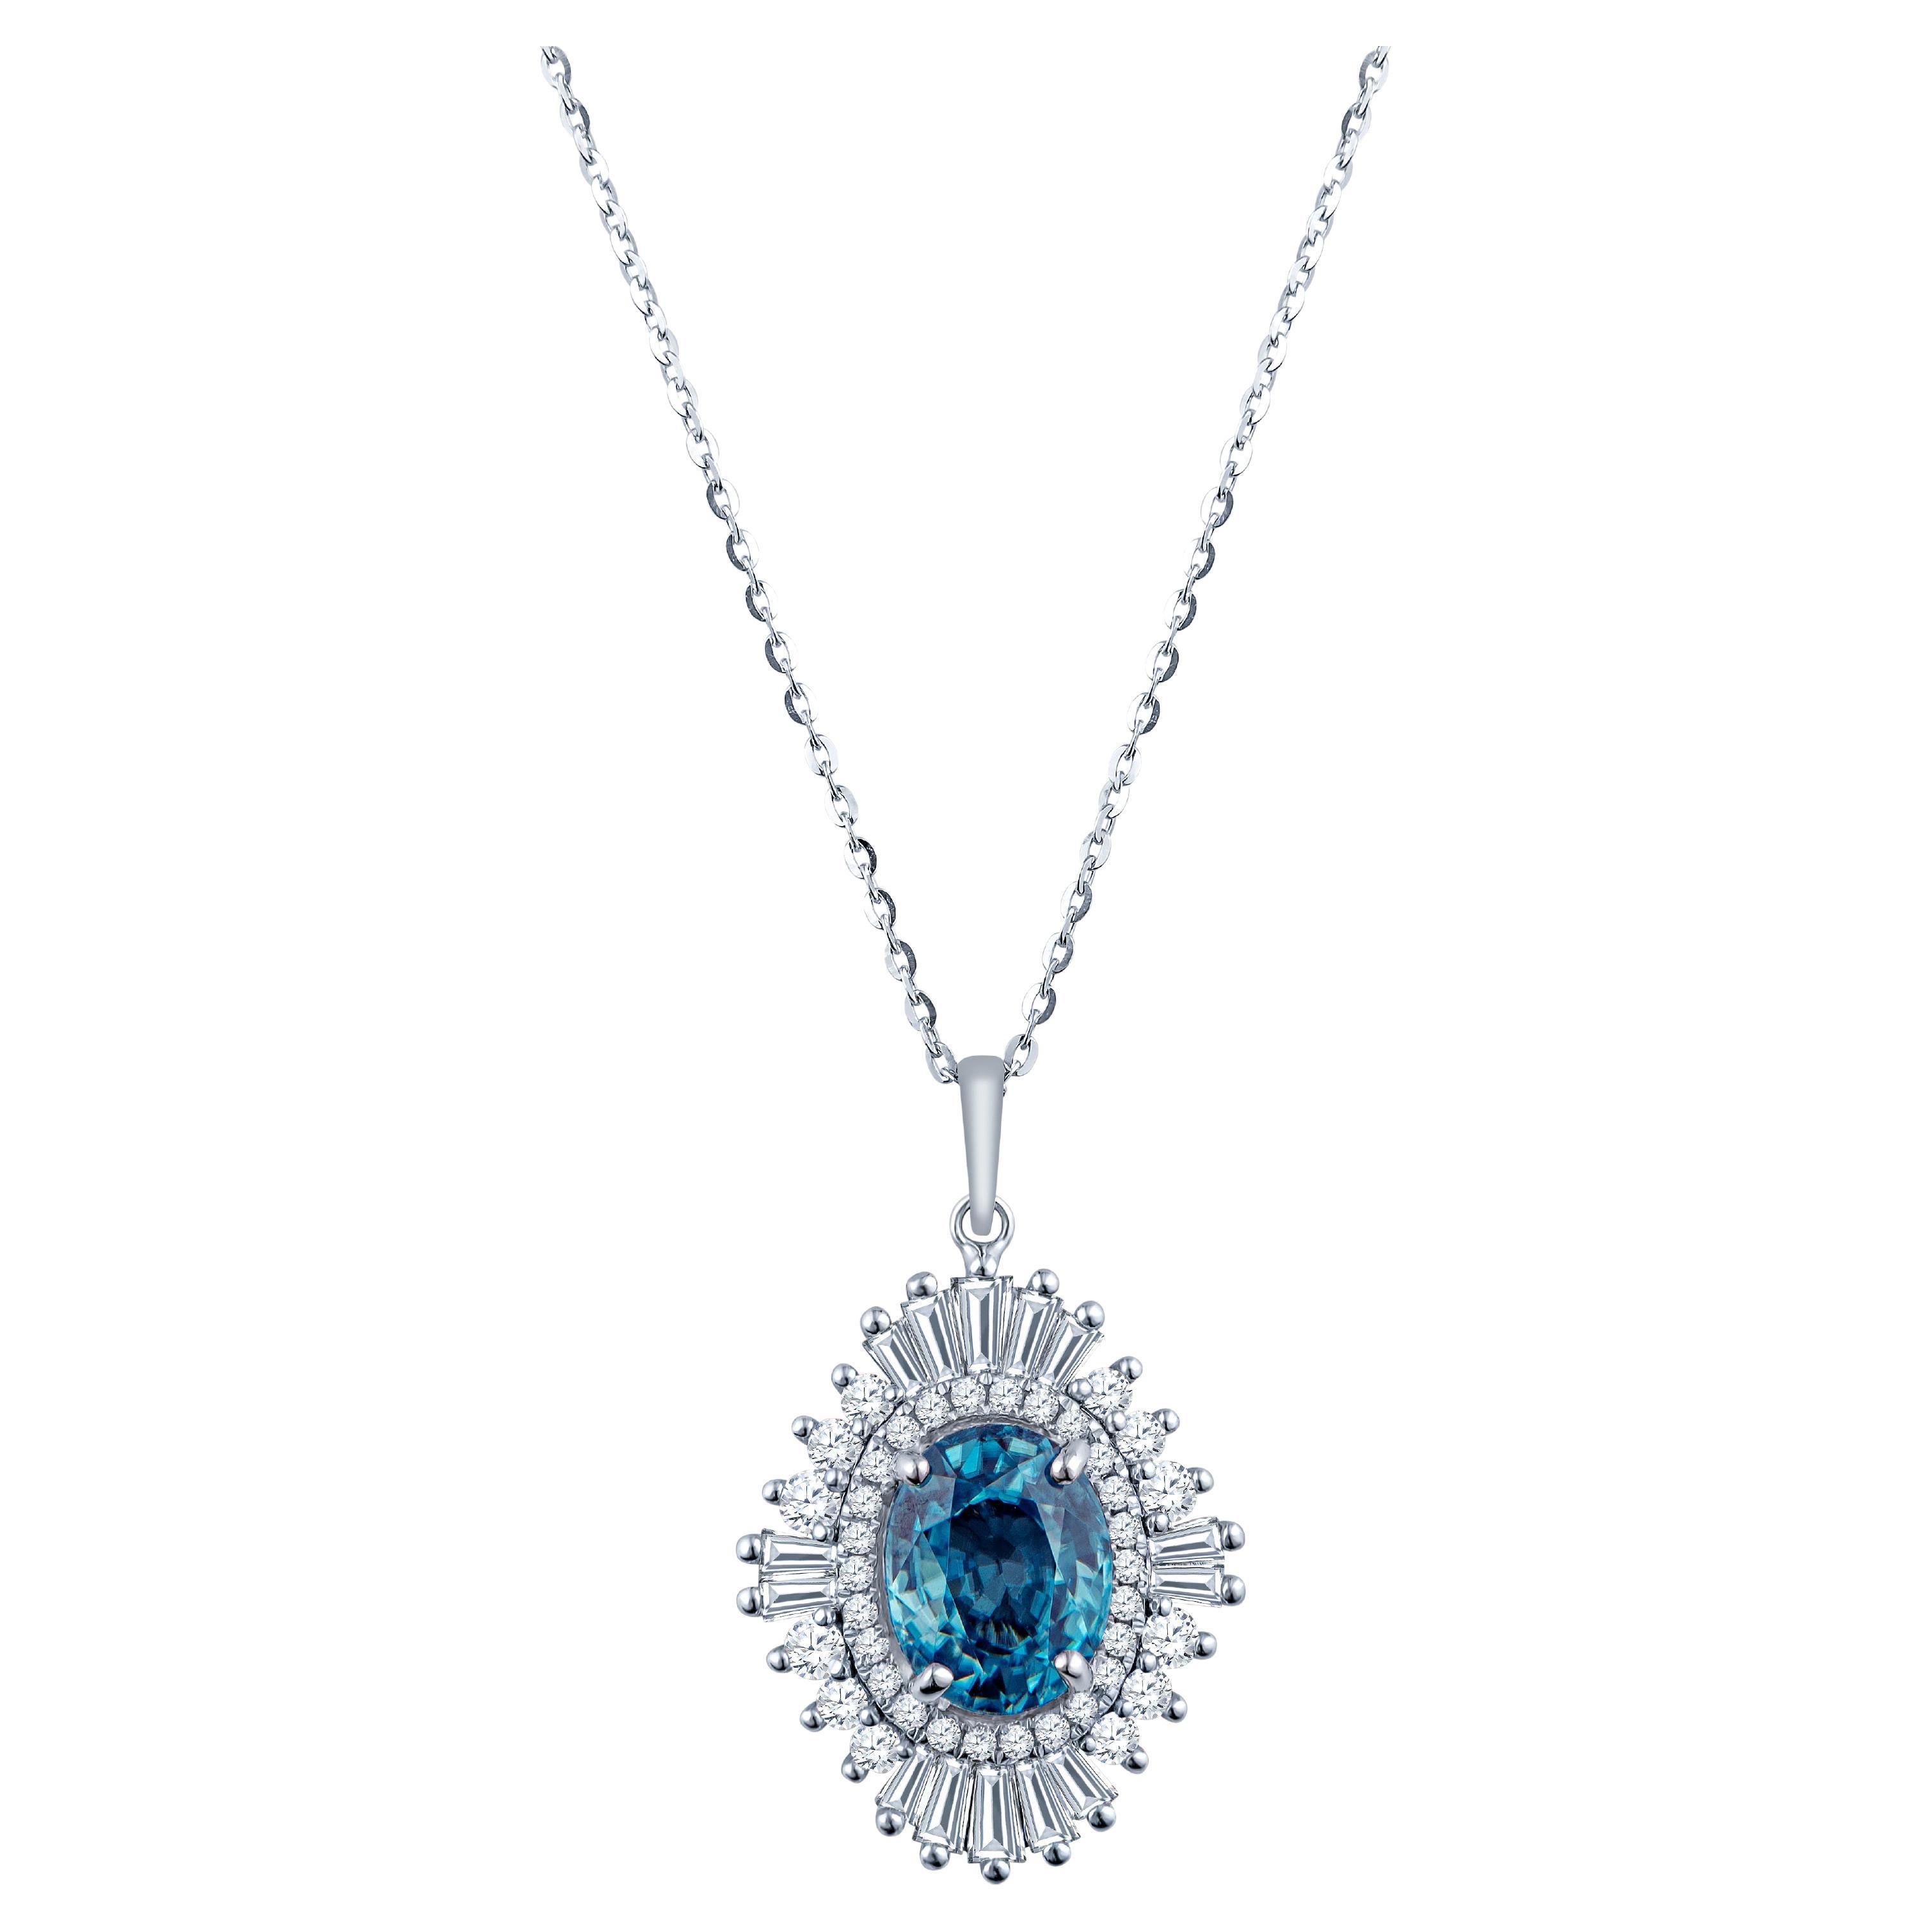 3.98 Carat Oval Cut Blue Zircon Pendant Necklace with 0.92ctw Diamonds, 18k Gold